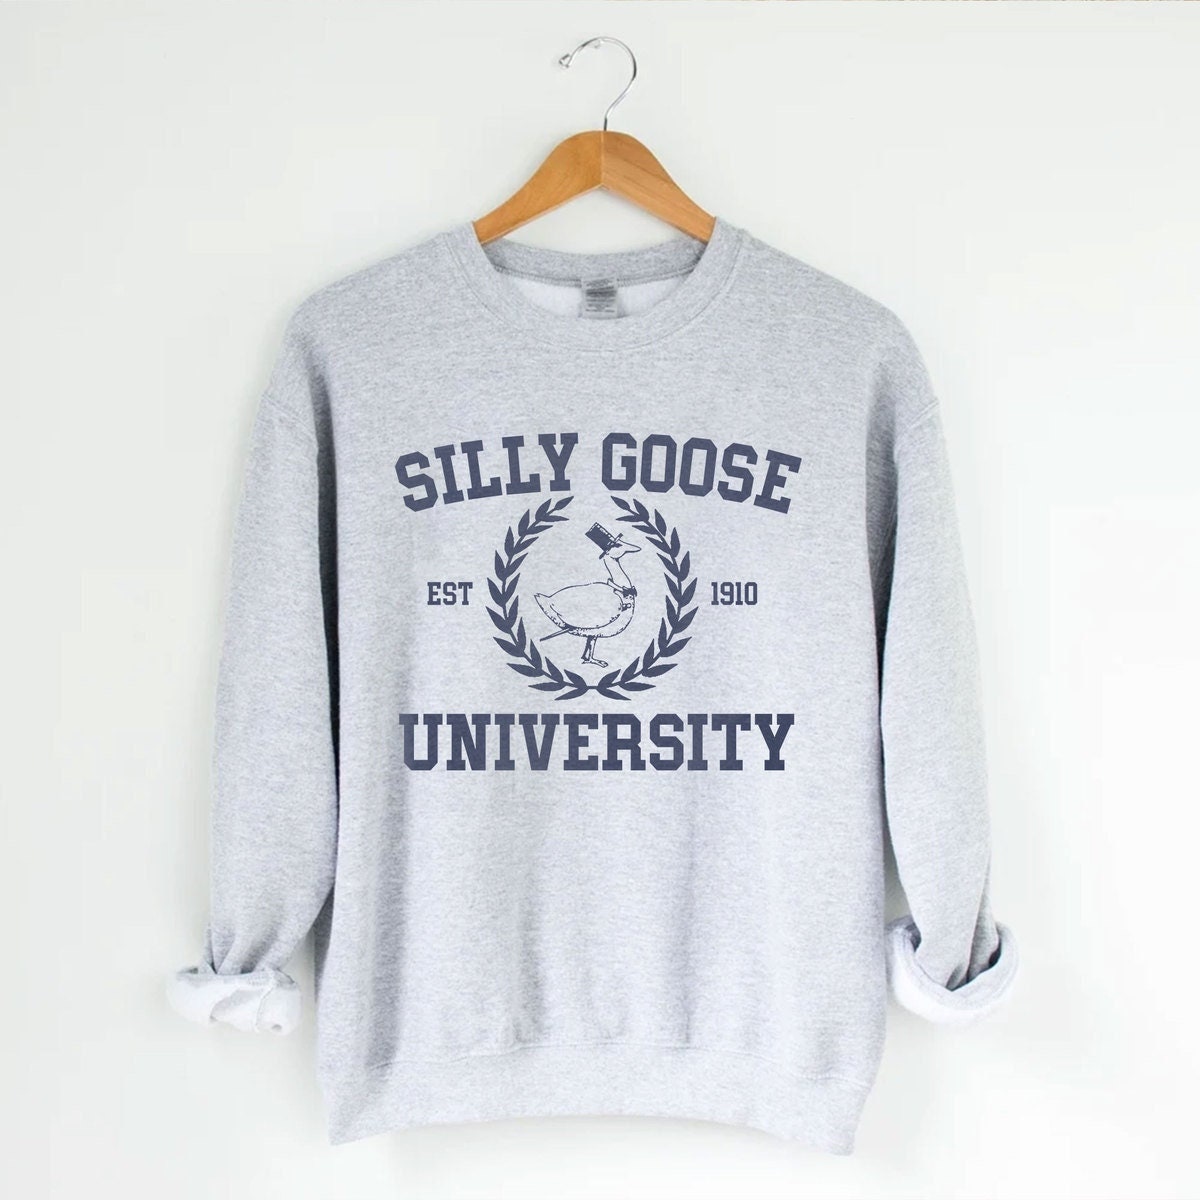 Discover Silly Goose University Crewneck Sweatshirt, Unisex Silly Goose Shirt , Funny Men's Sweatshirt